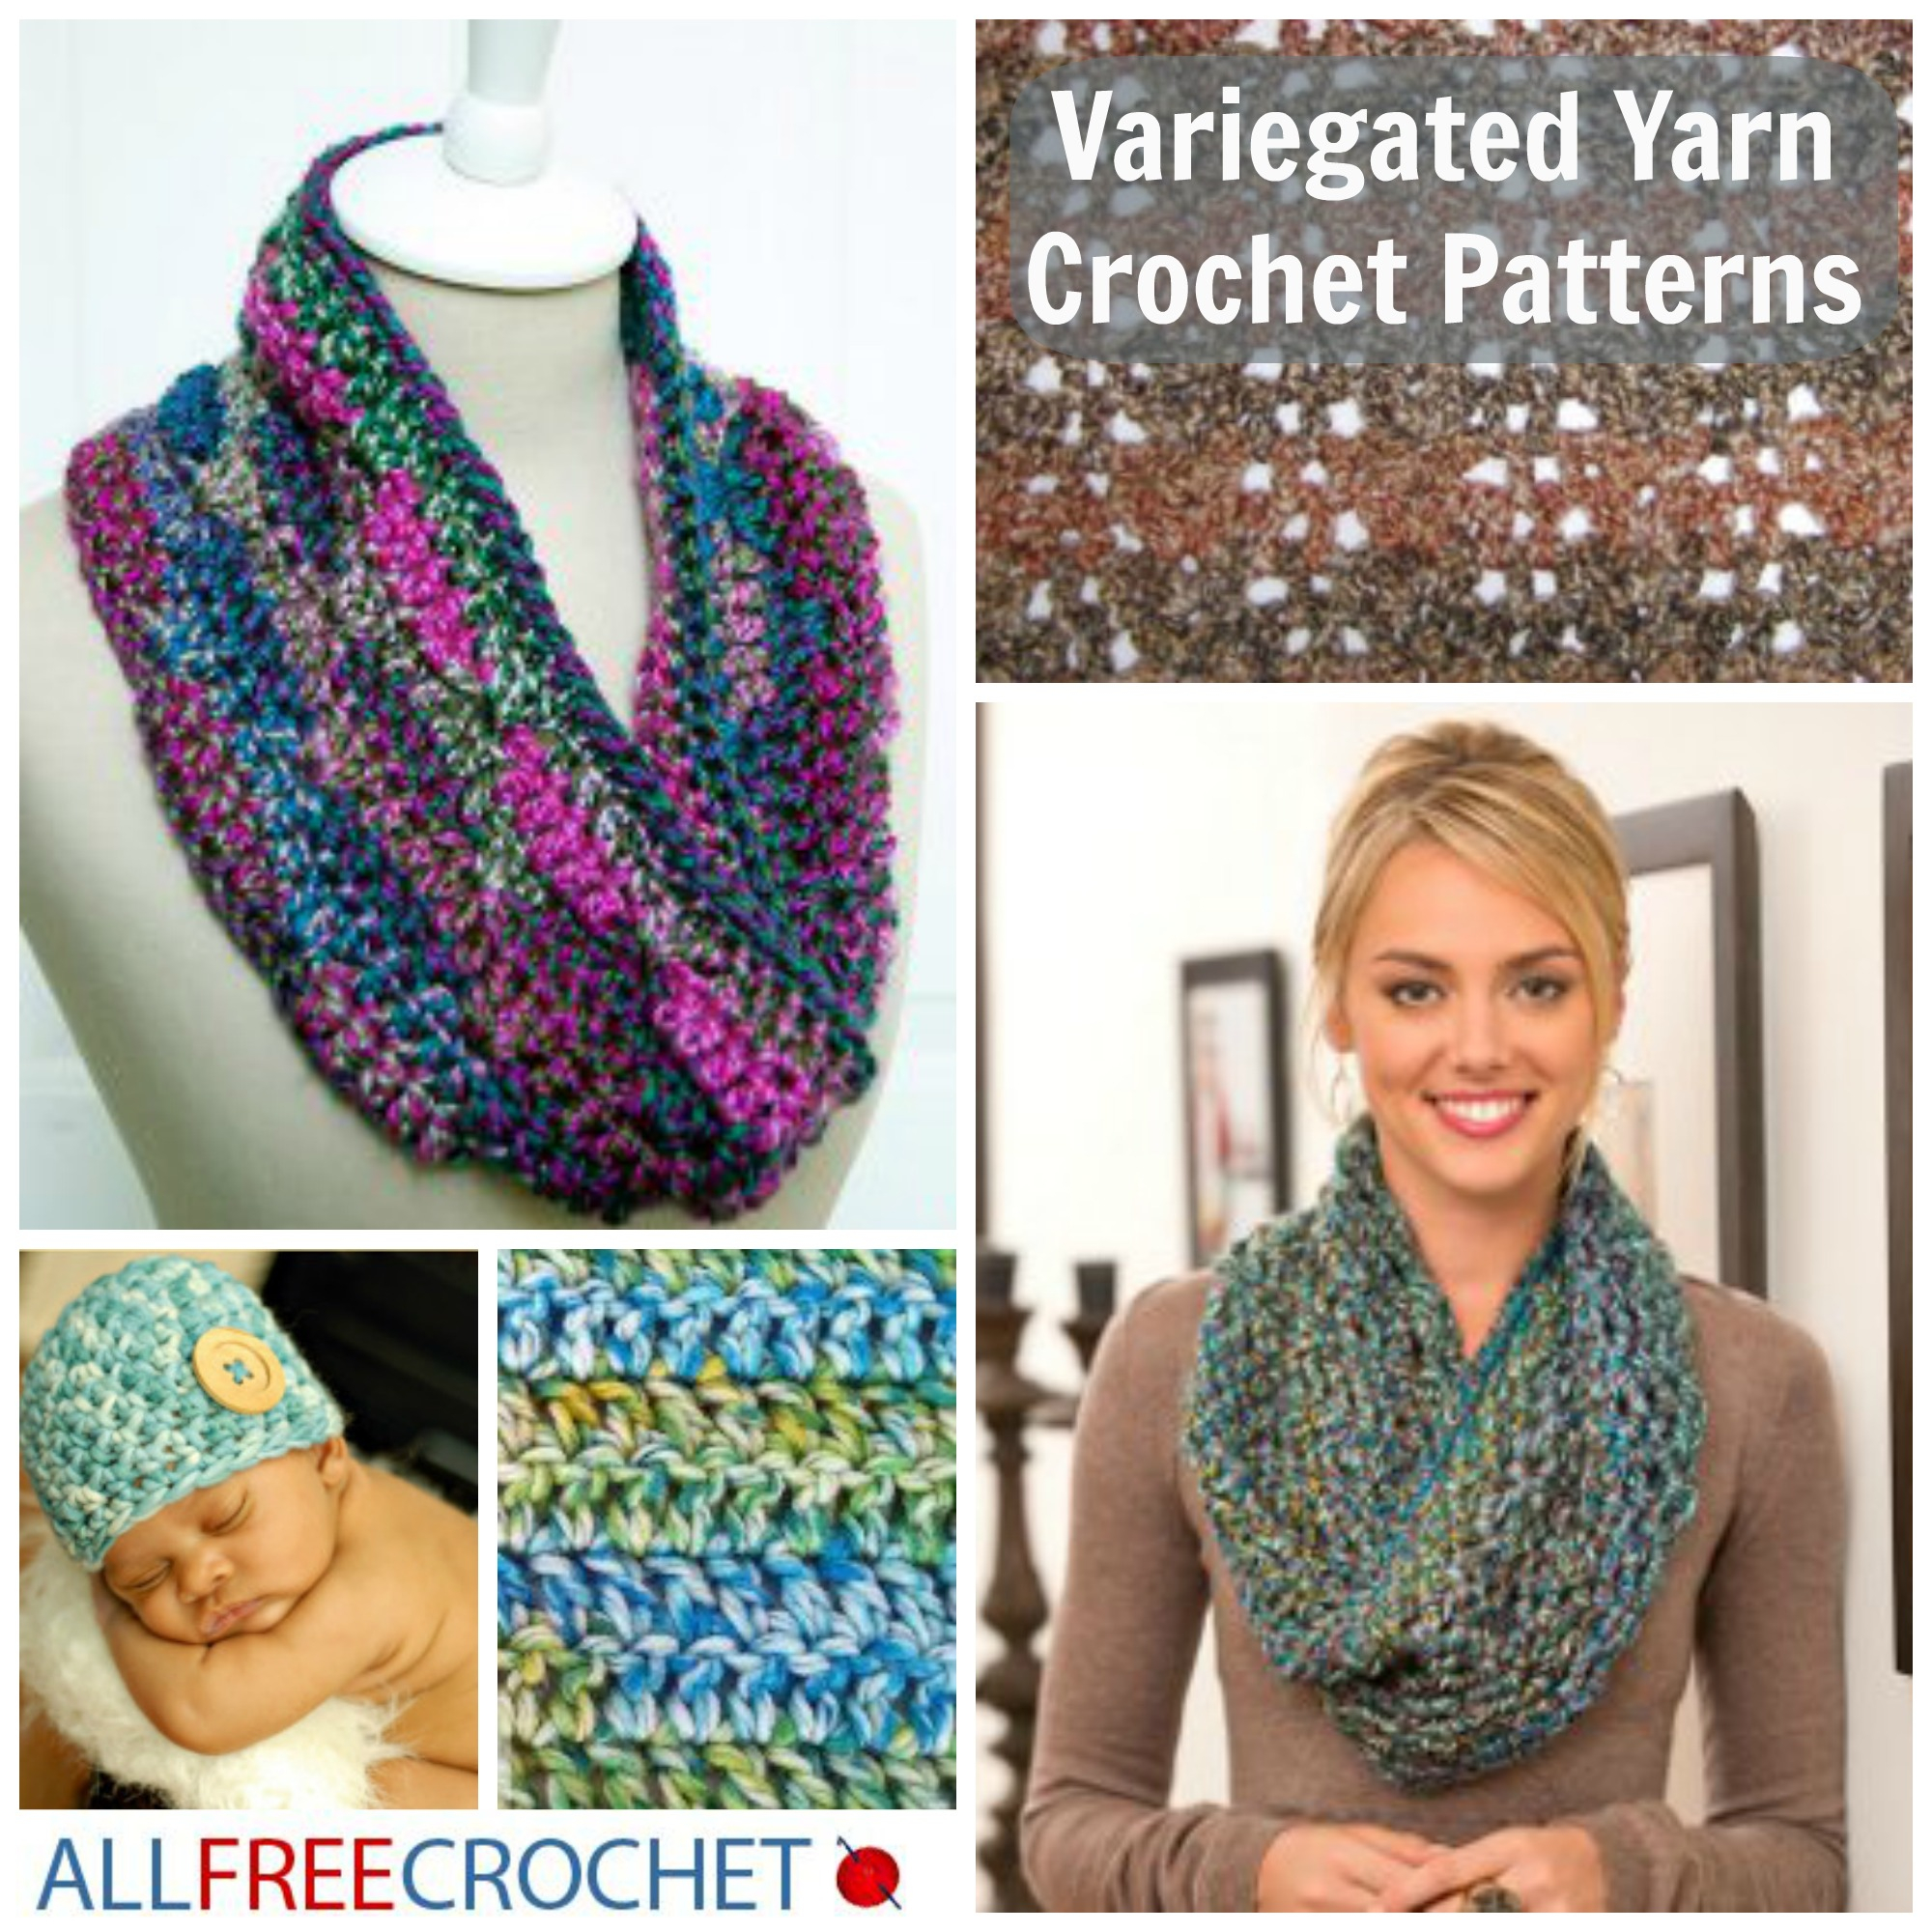 Variegated Yarn Patterns Knitting No Effort Colorful Crochet Variegated Yarn Patterns Stitch And Unwind